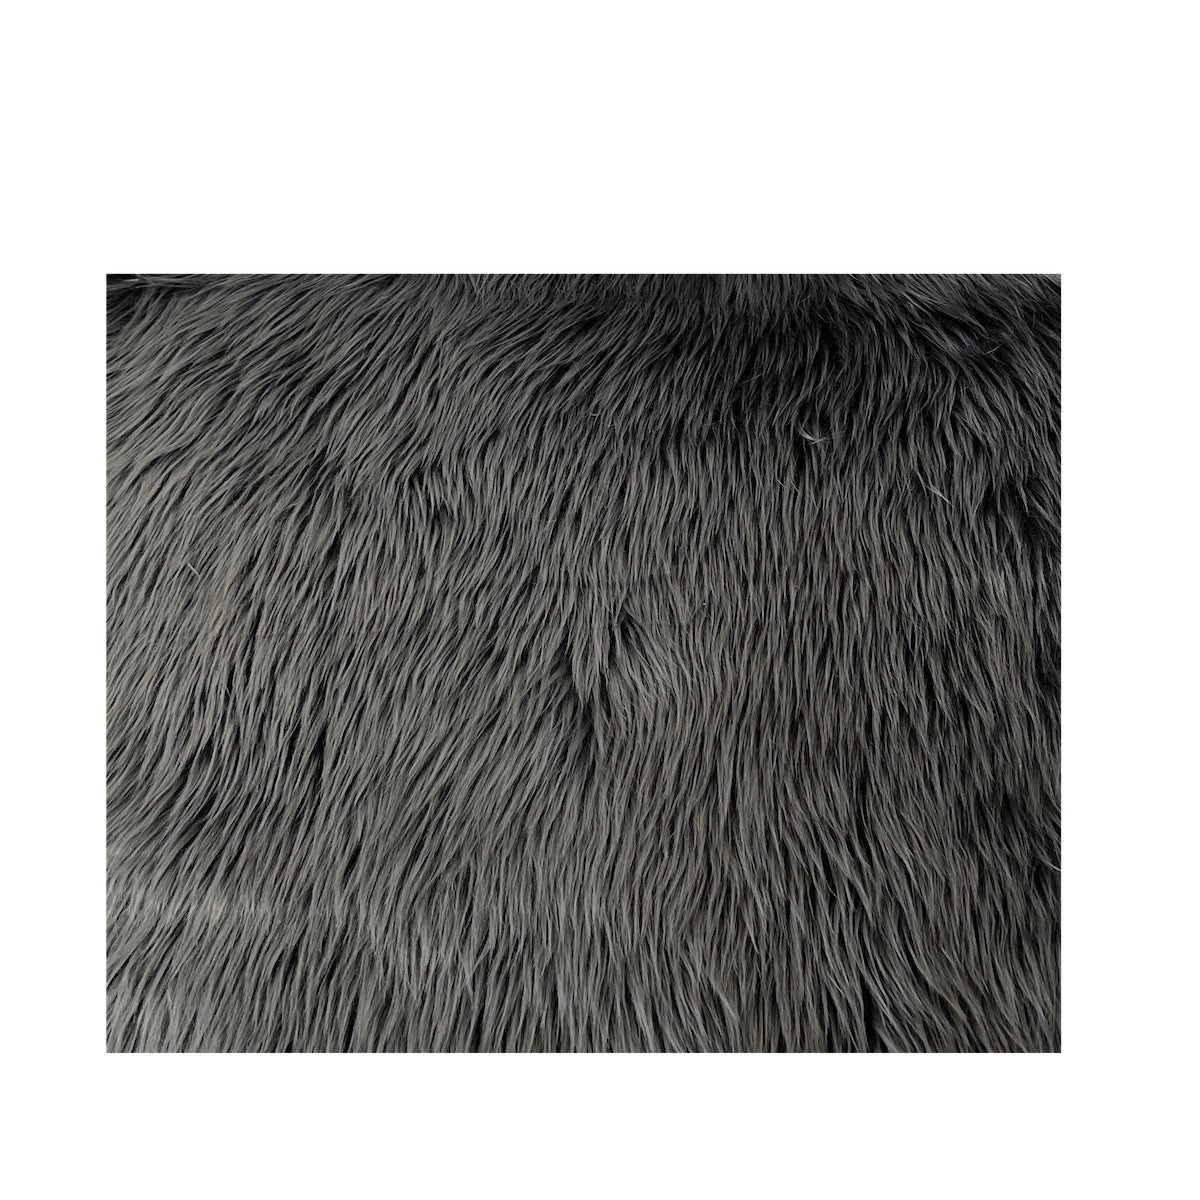 Charcoal Gray Luxury Long Pile Shaggy Faux Fur Fabric - Fashion Fabrics LLC